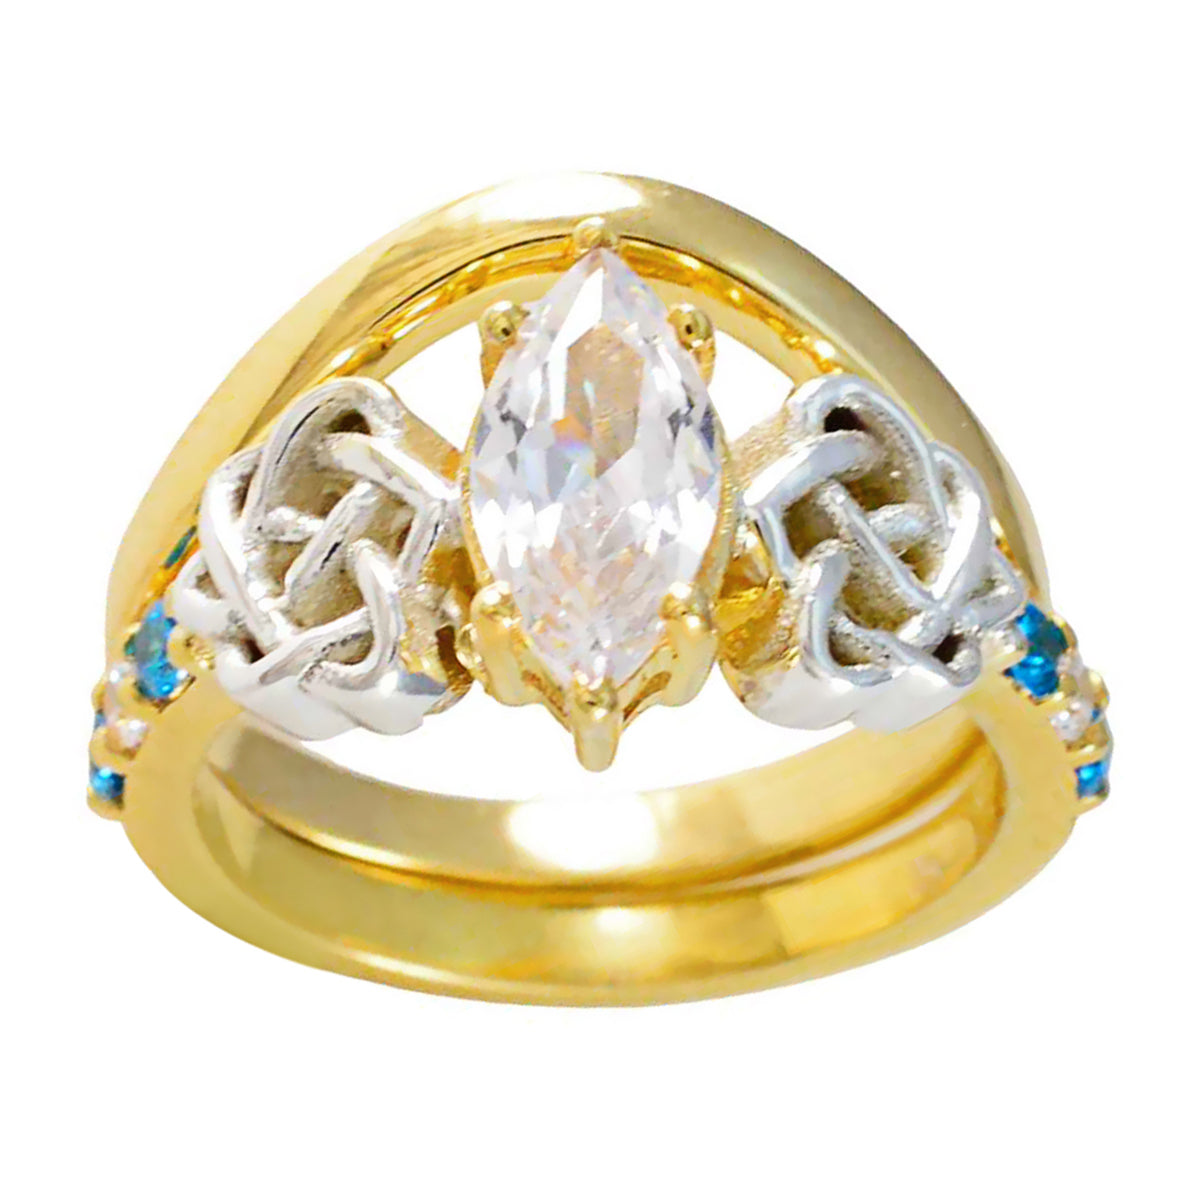 Riyo Beautiful Silver Ring With Yellow Gold Plating Blue Topaz CZ Stone Marquise Shape Prong Setting Handamde Jewelry Birthday Ring